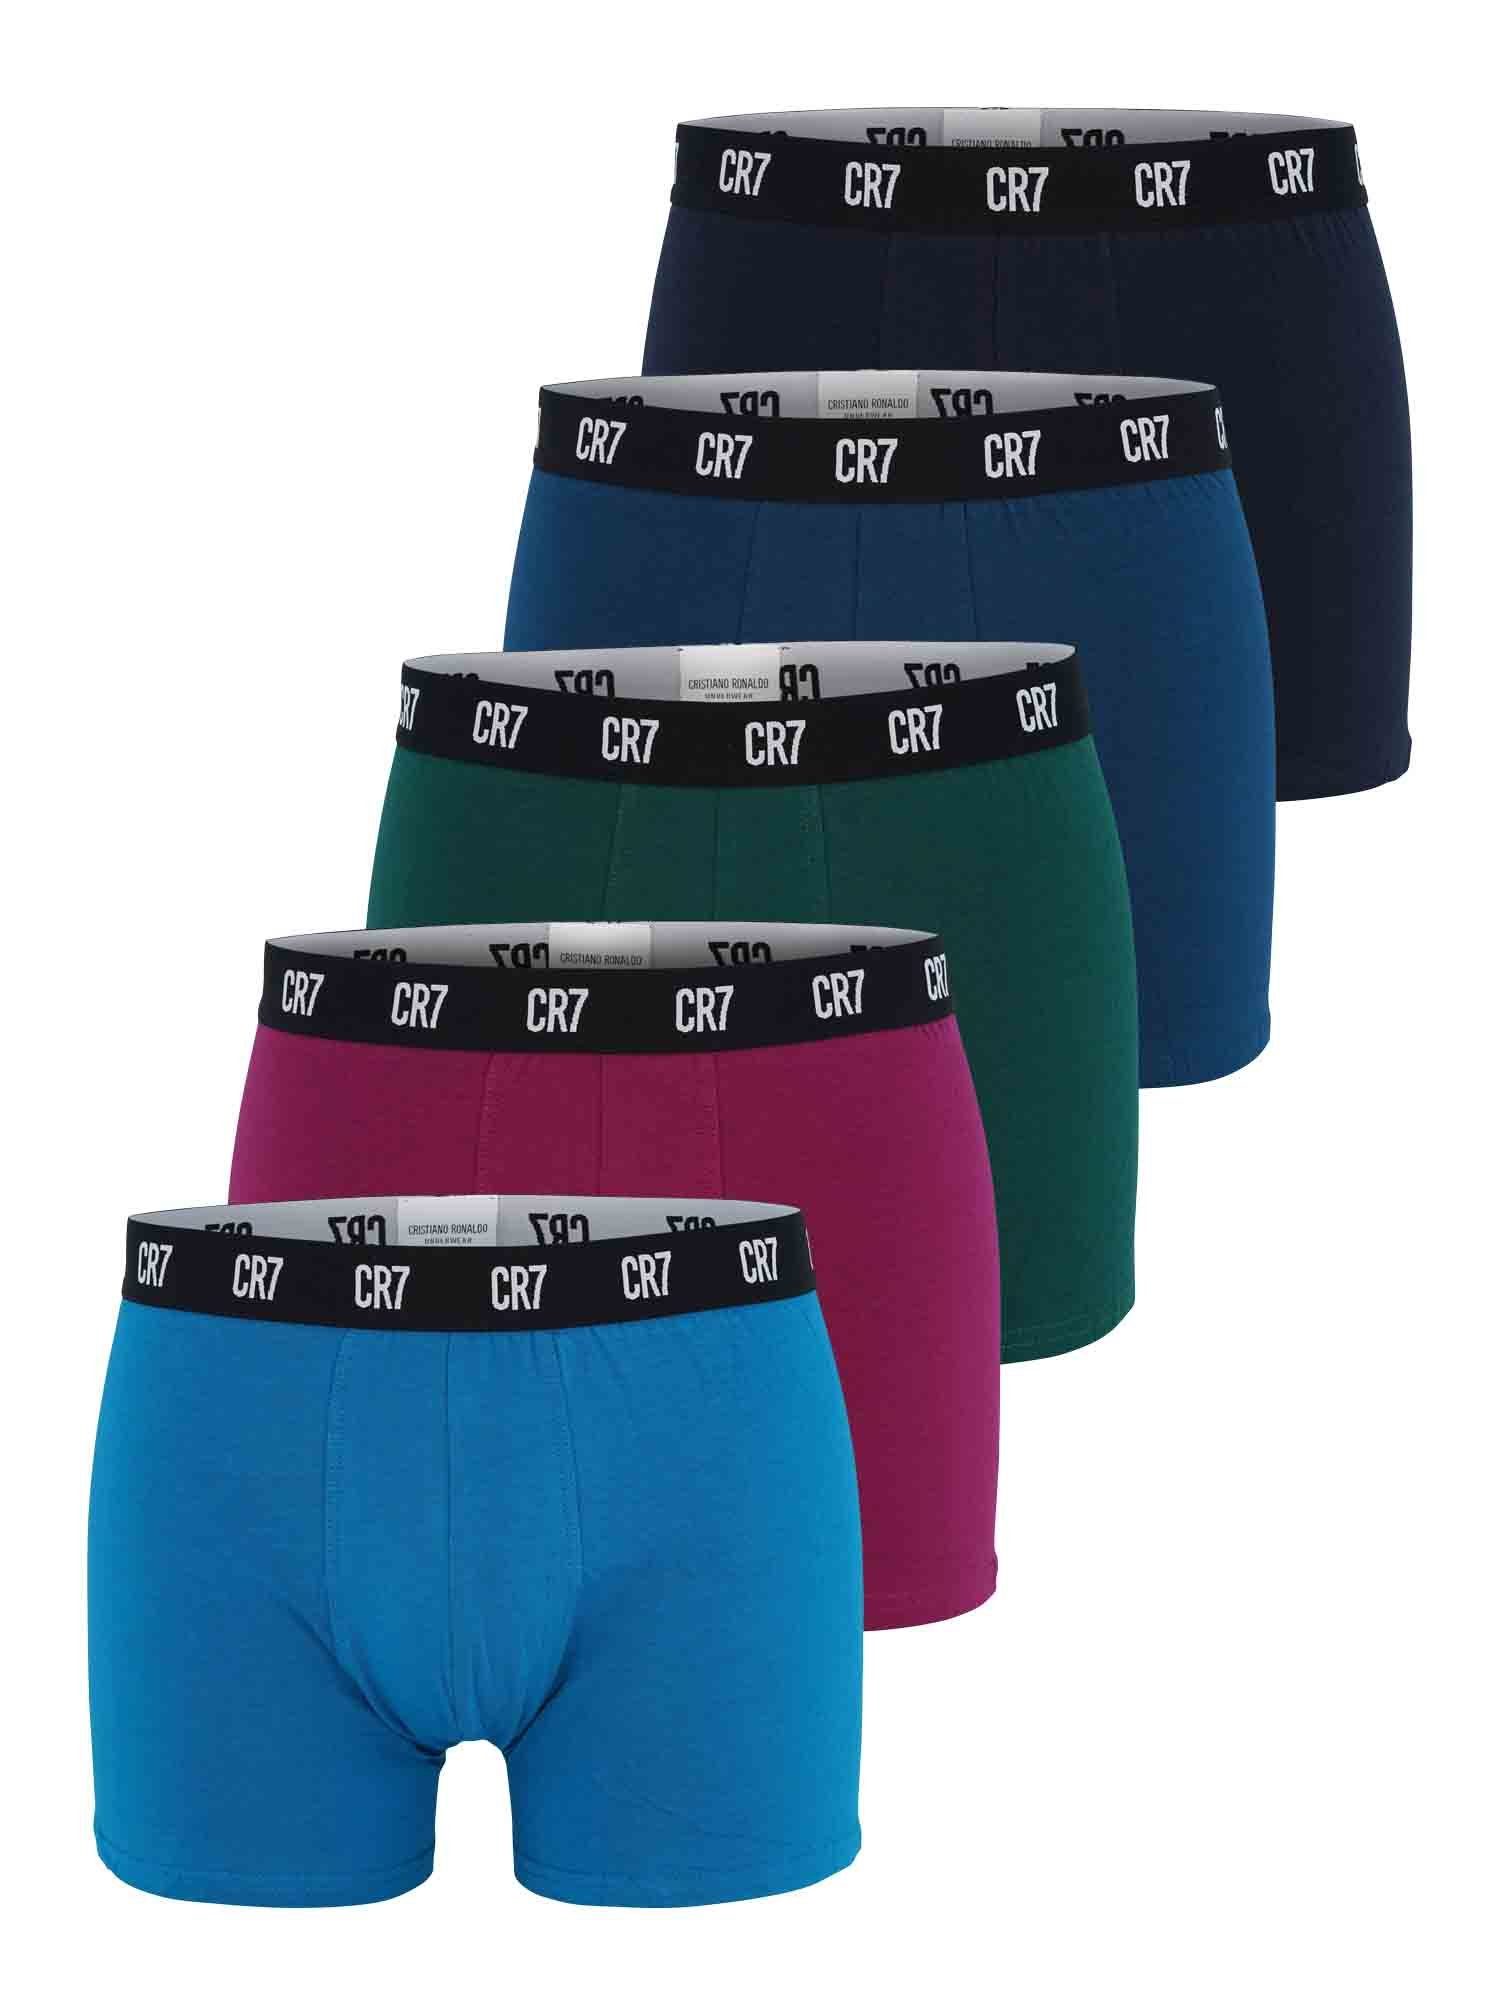 Pants Herren Multi 7 Männer Multipack CR7 Trunks (5-St) Boxershorts Retro Retro Pants